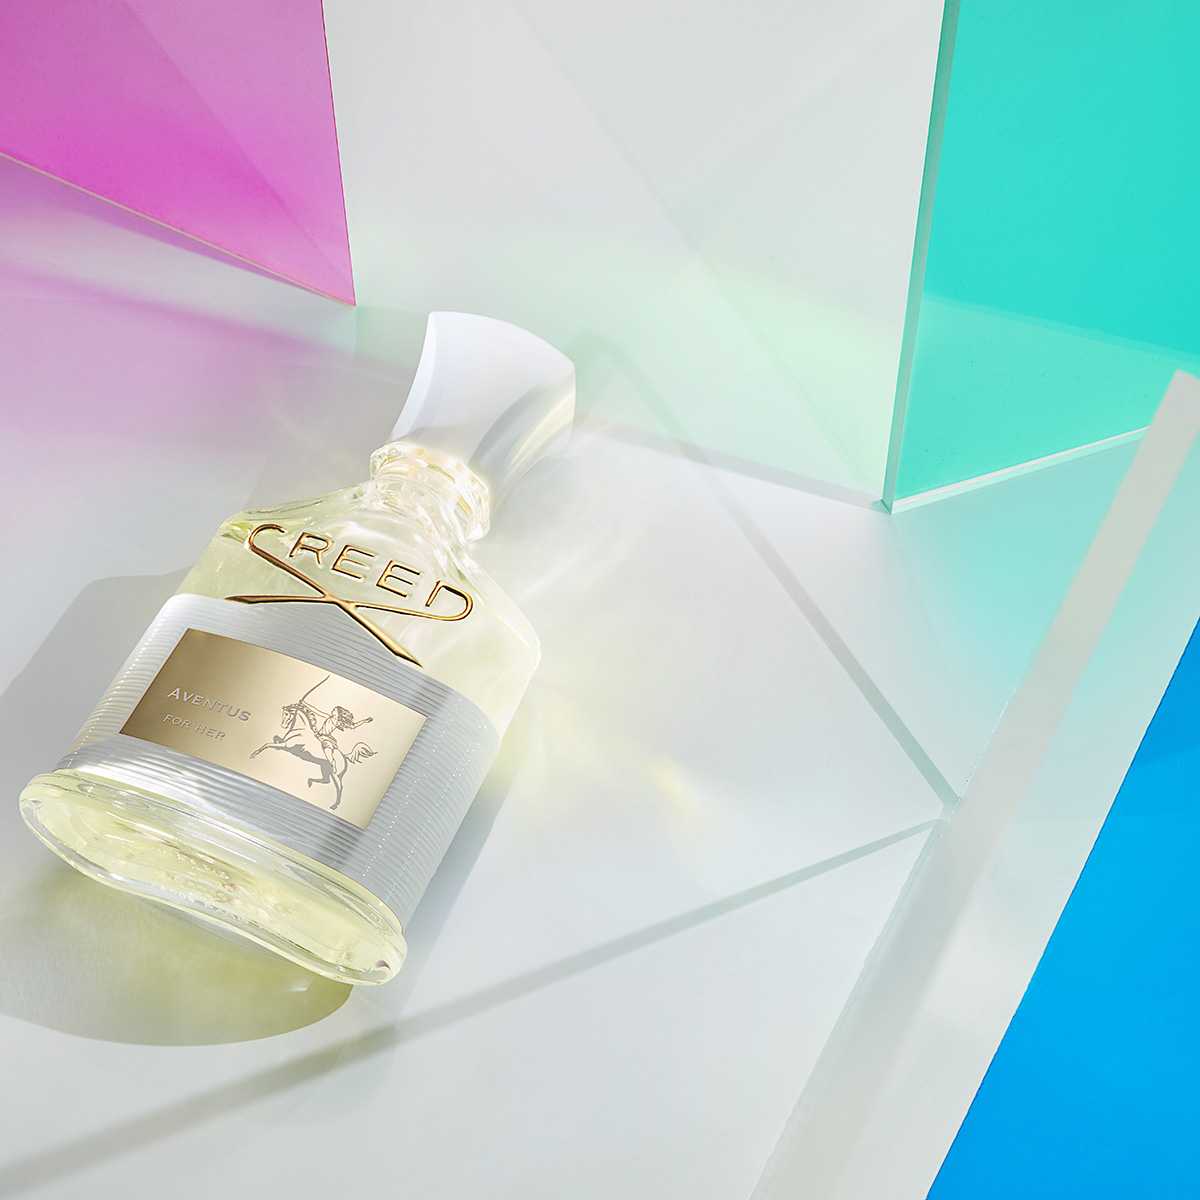 Creed - Aventus For Her Eau de Parfum